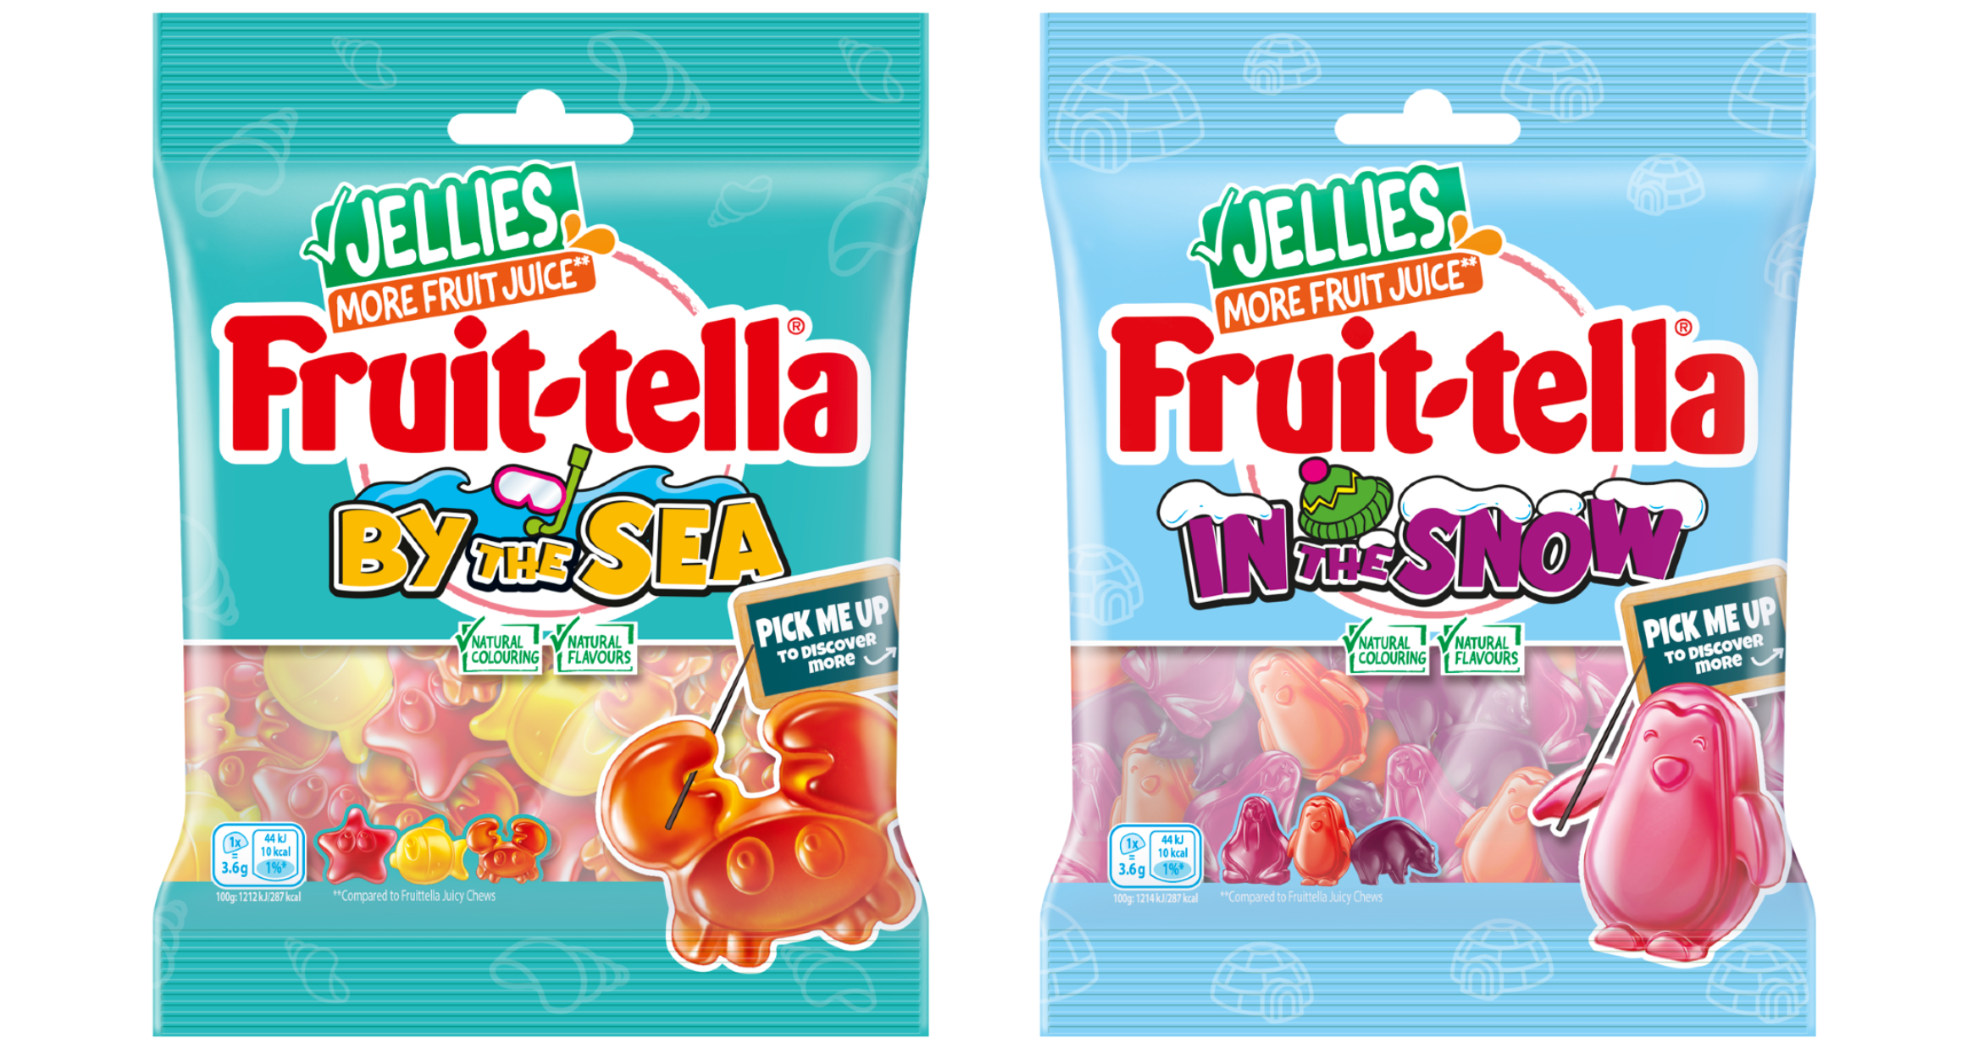 Nieuwe Engelse Fruittella's voldoen aan HFSS norm